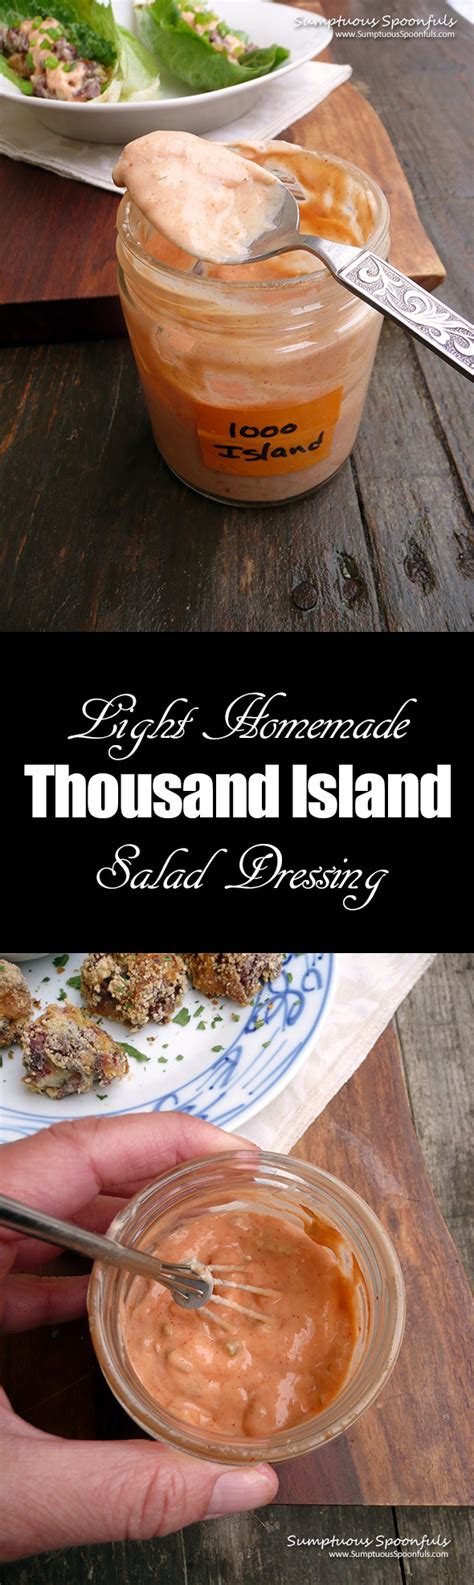 light-homemade-thousand-island-dressing image